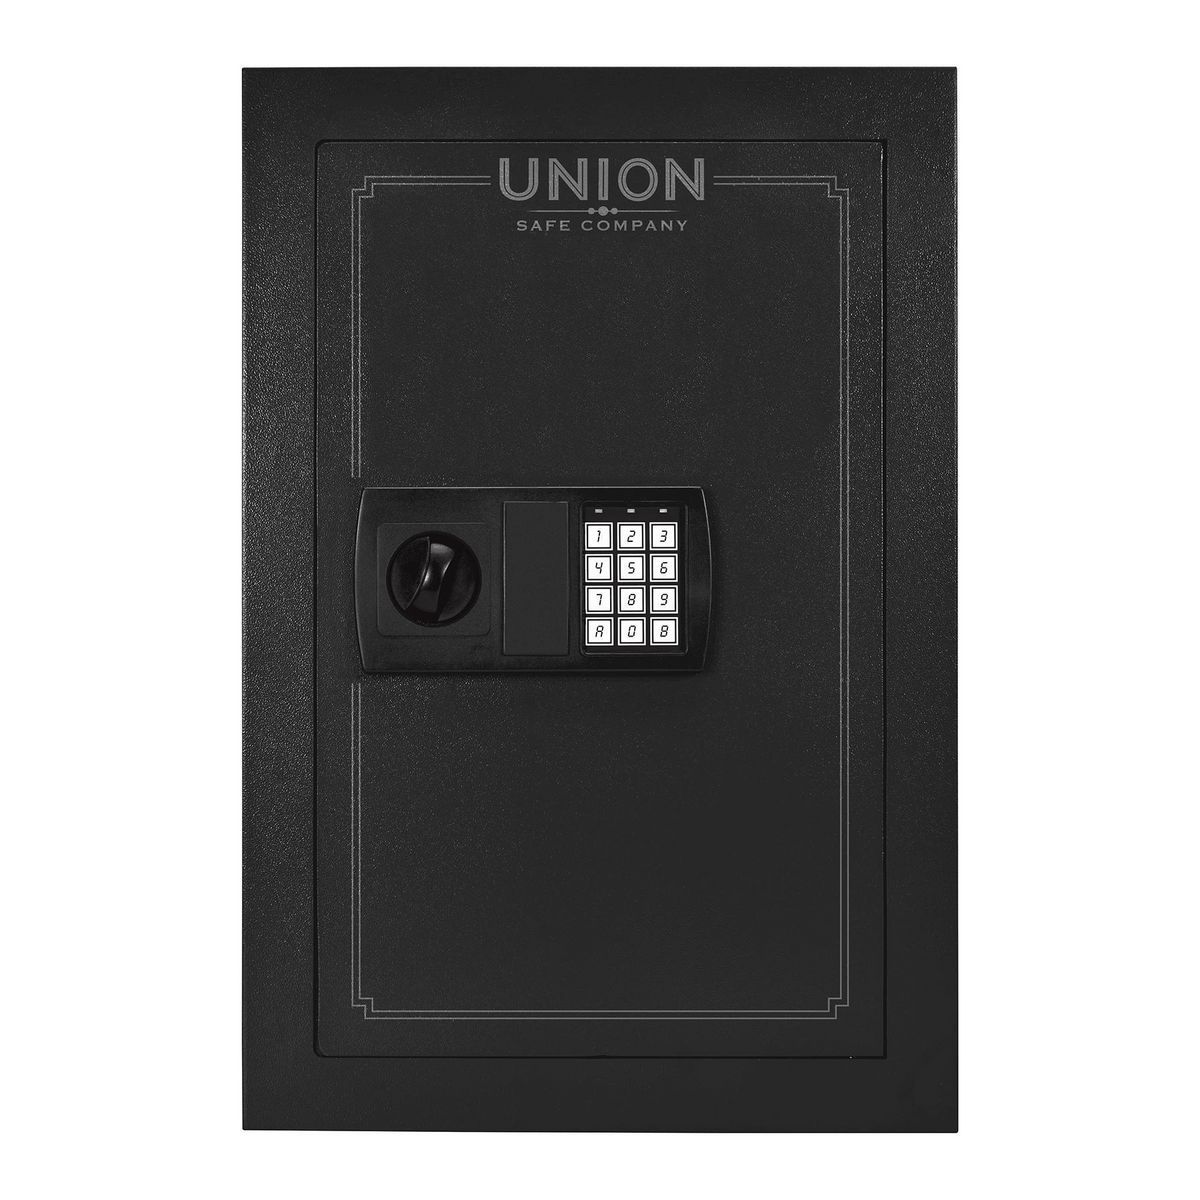 UNION SAFE COMPANY 0.53 cu. ft. Electronic Digital Wall Safe